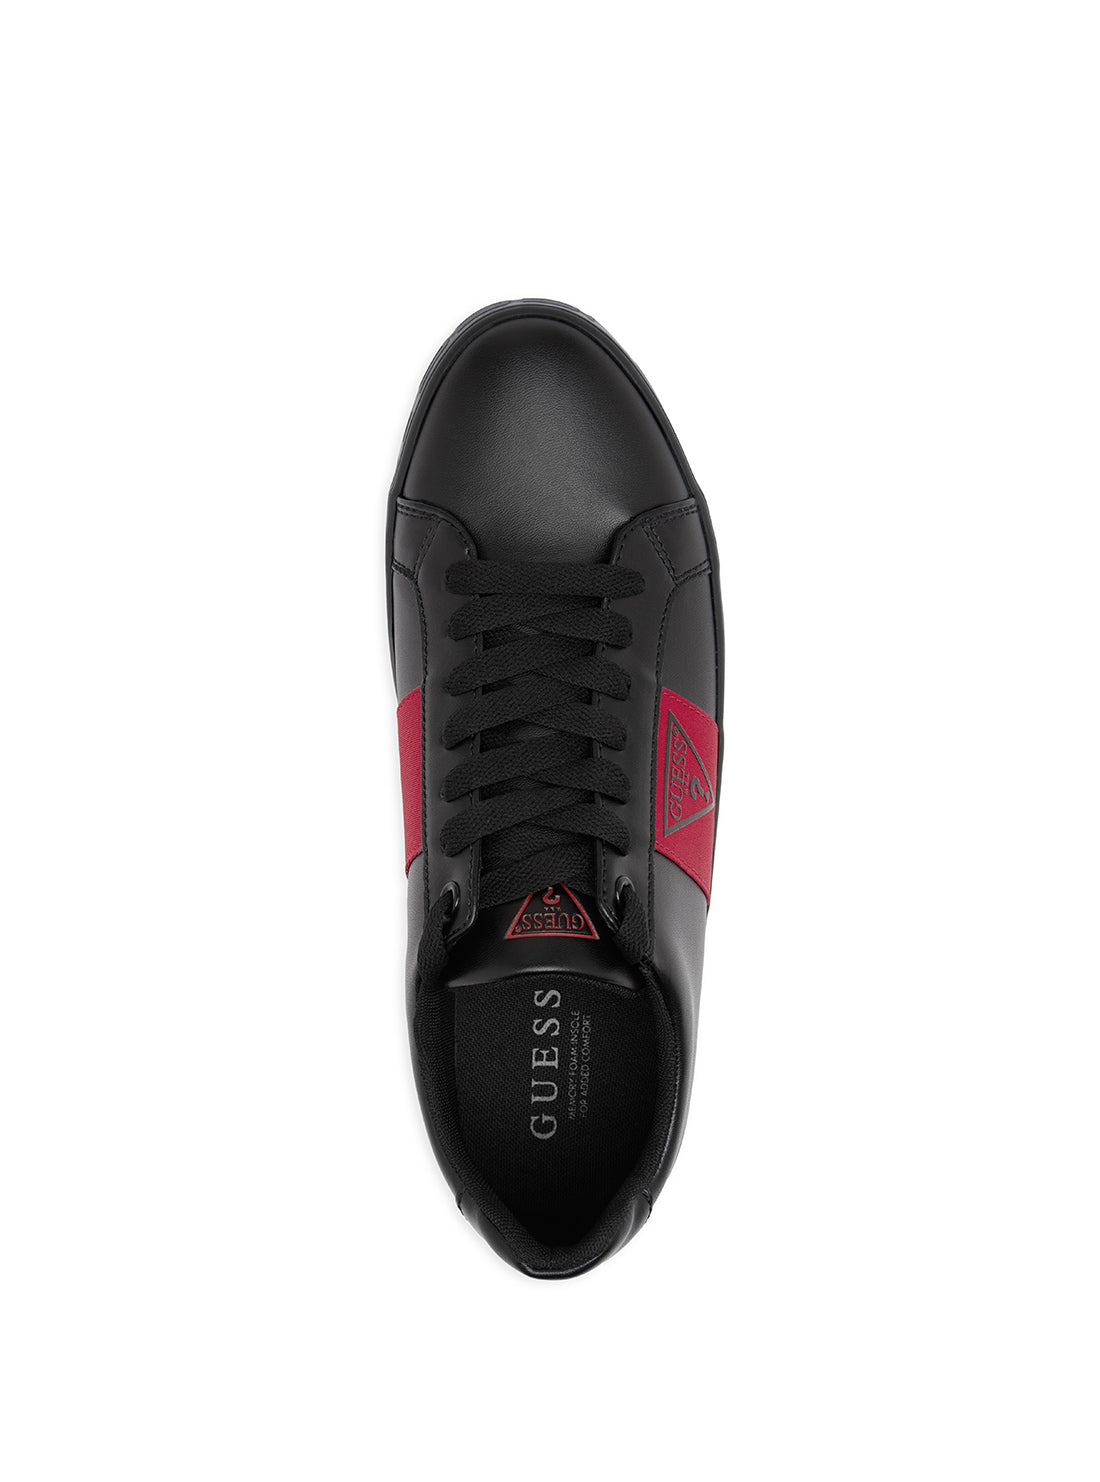 GUESS Men's Black Red Paschal Low Top Sneakers PASCHAL Top View